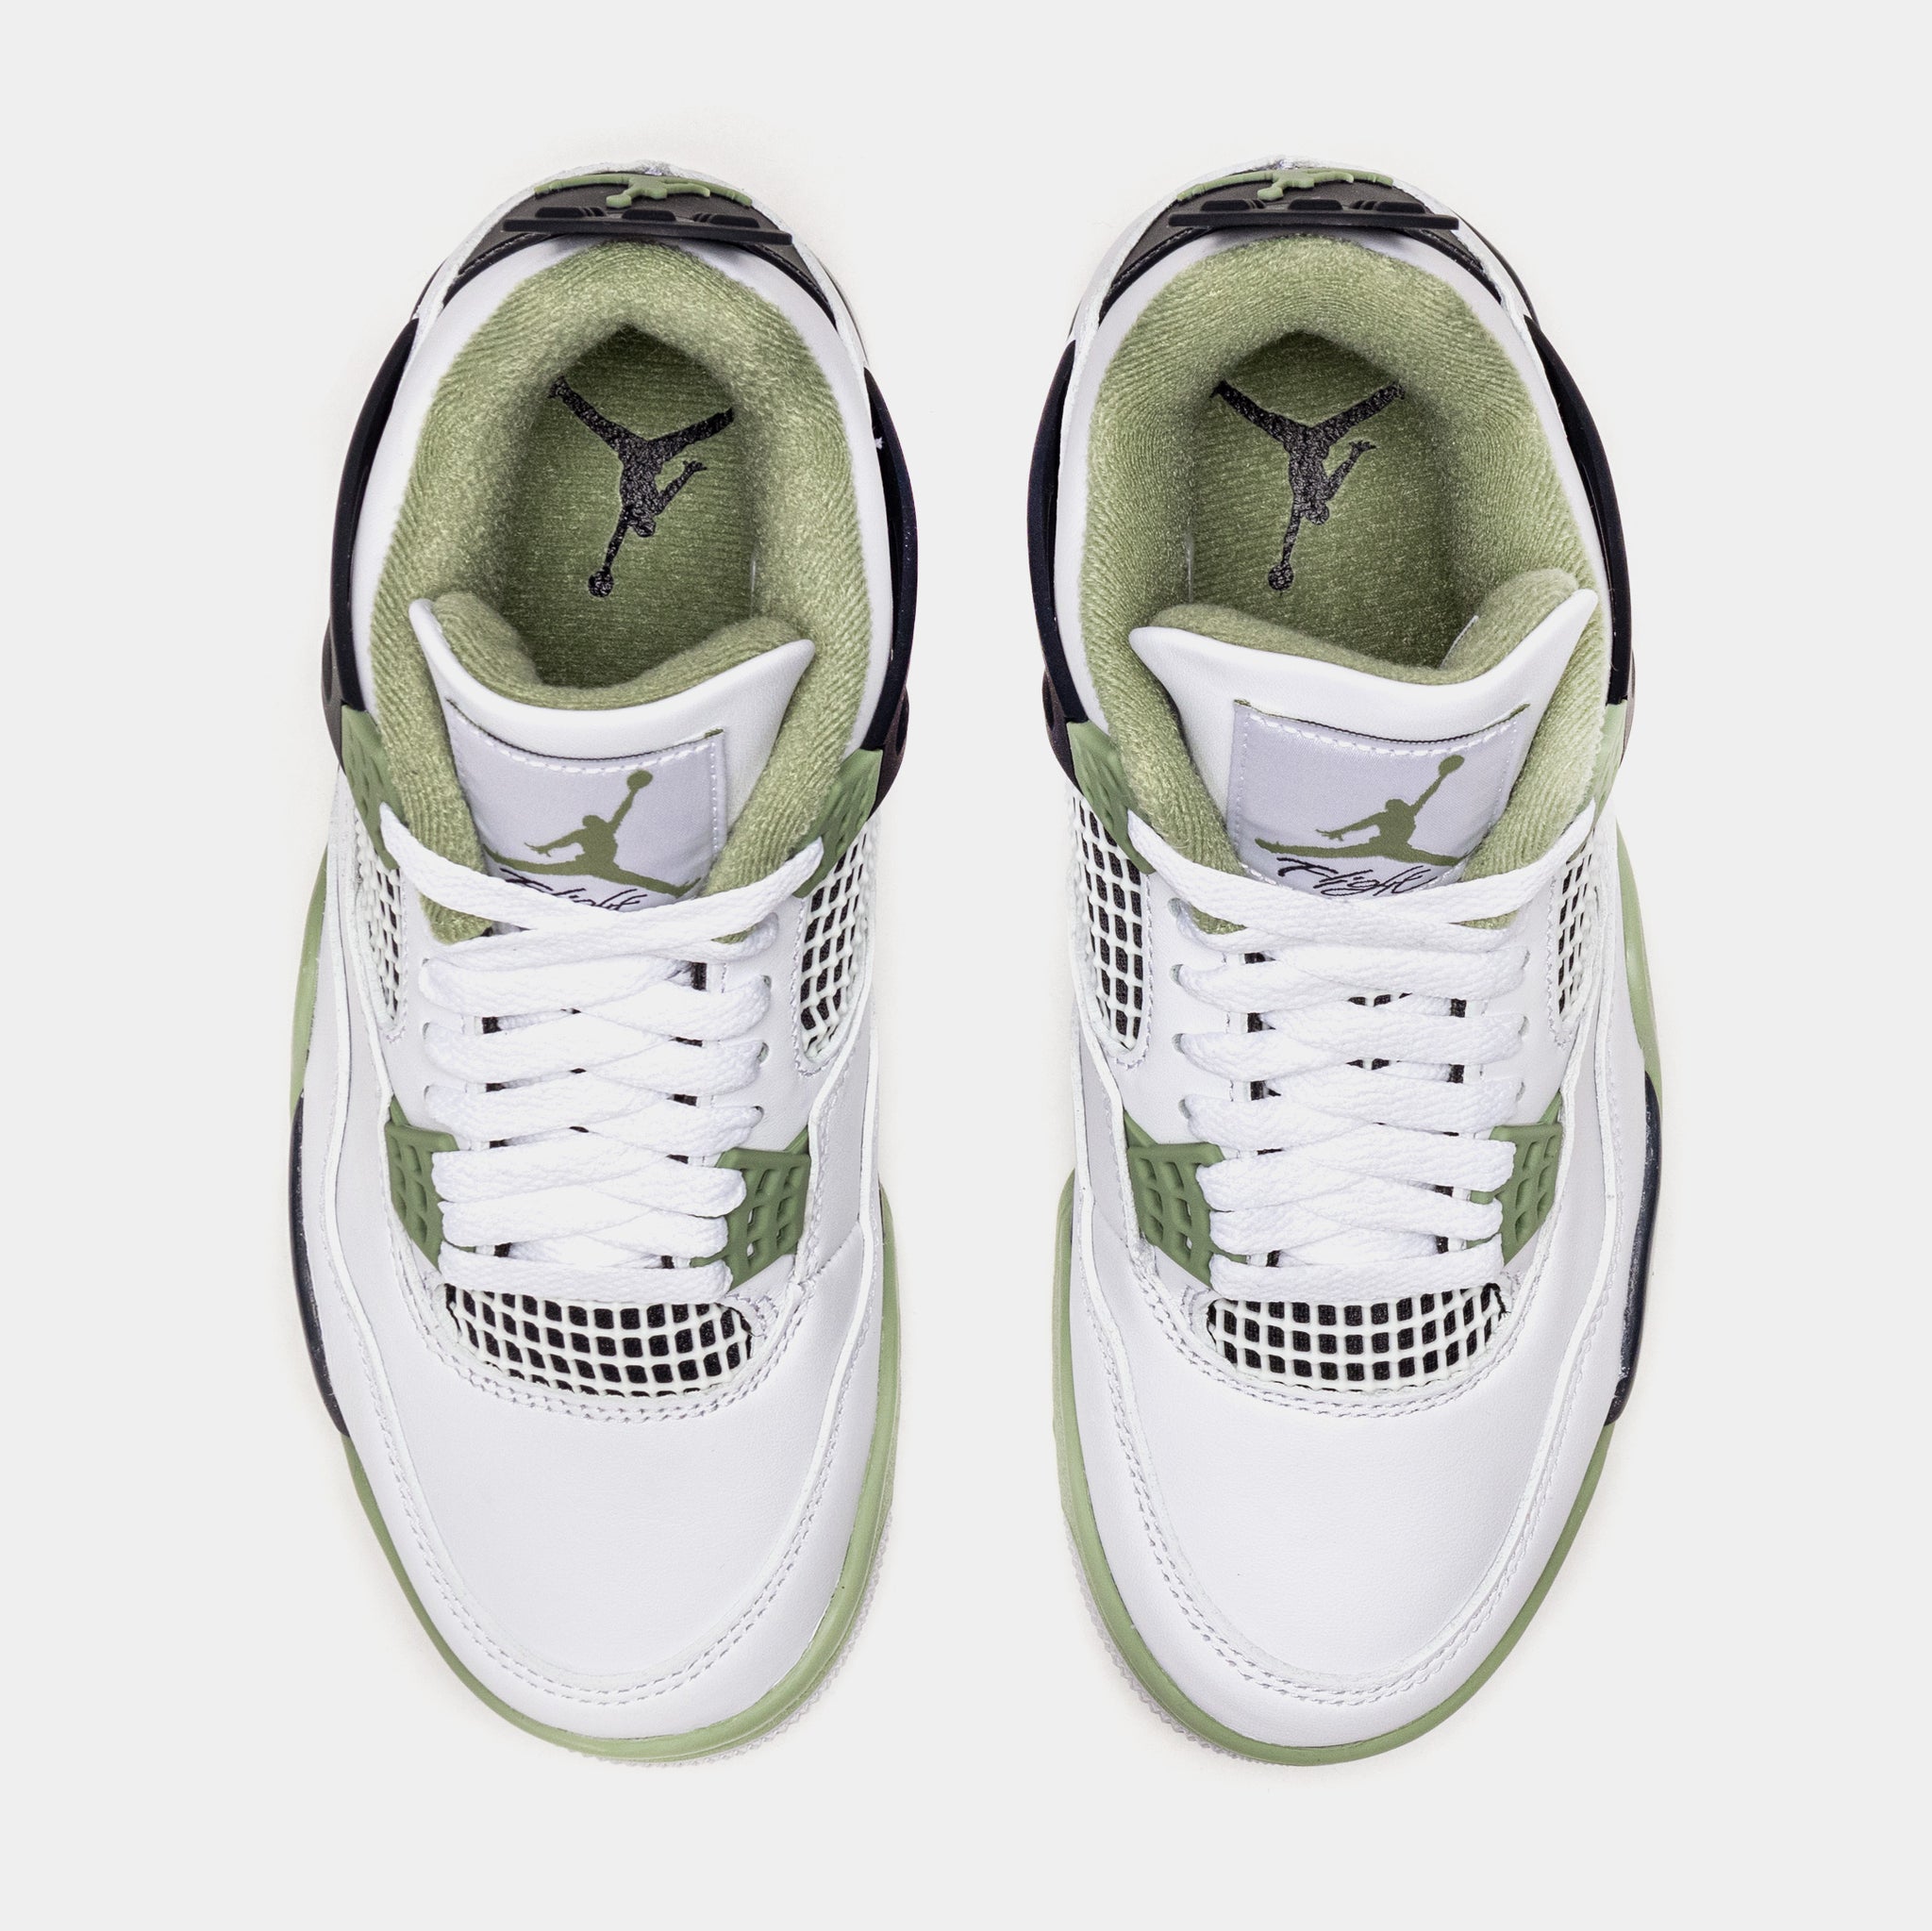 Jordan Air Jordan 4 Retro Oil Green Womens Lifestyle Shoes Green